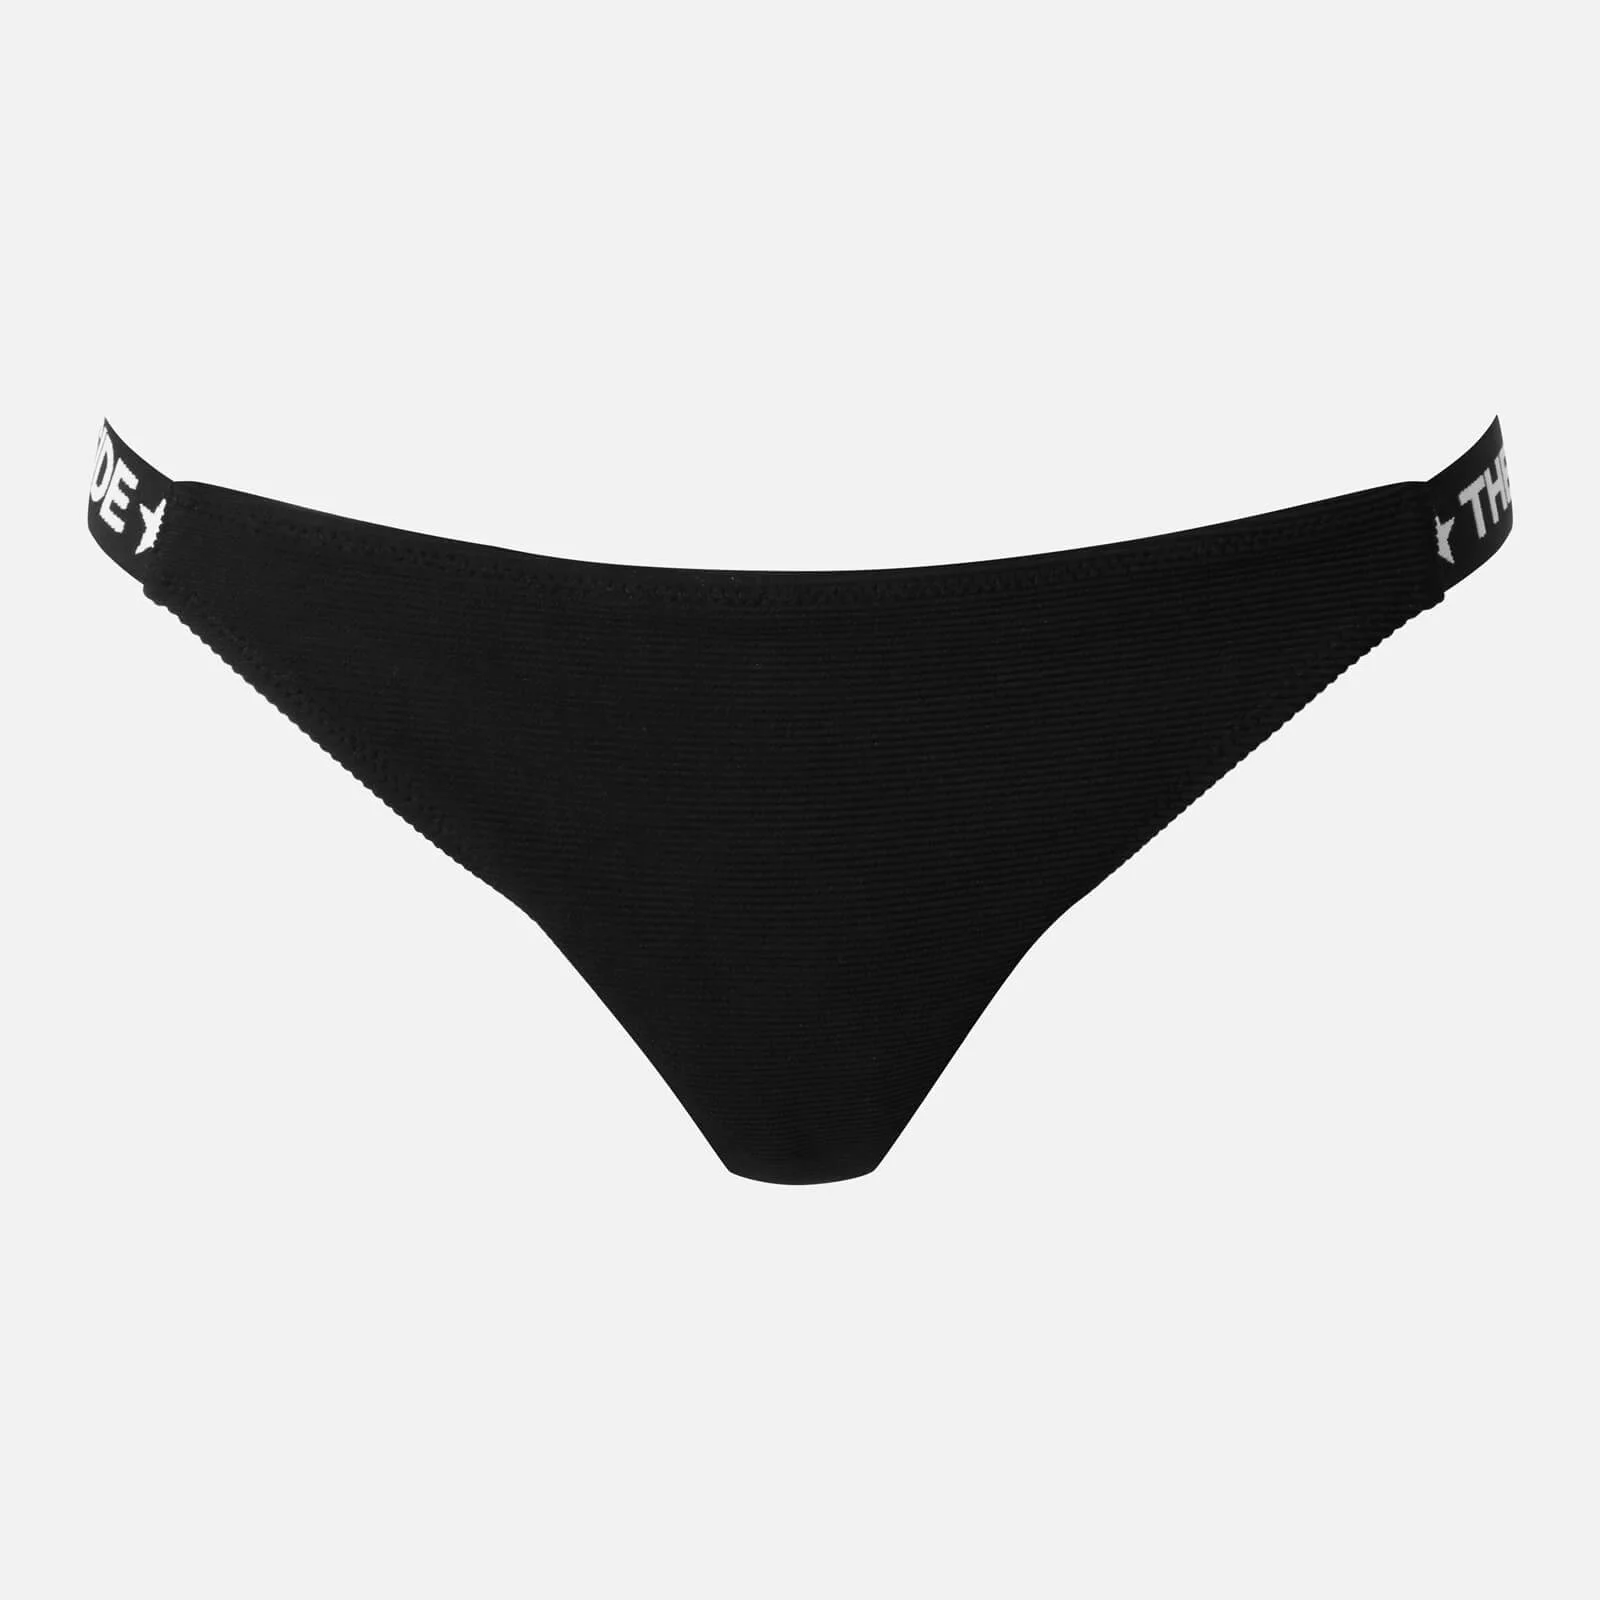 The Upside Women's Black Rib Sport Bikini Bottoms - Black Image 1